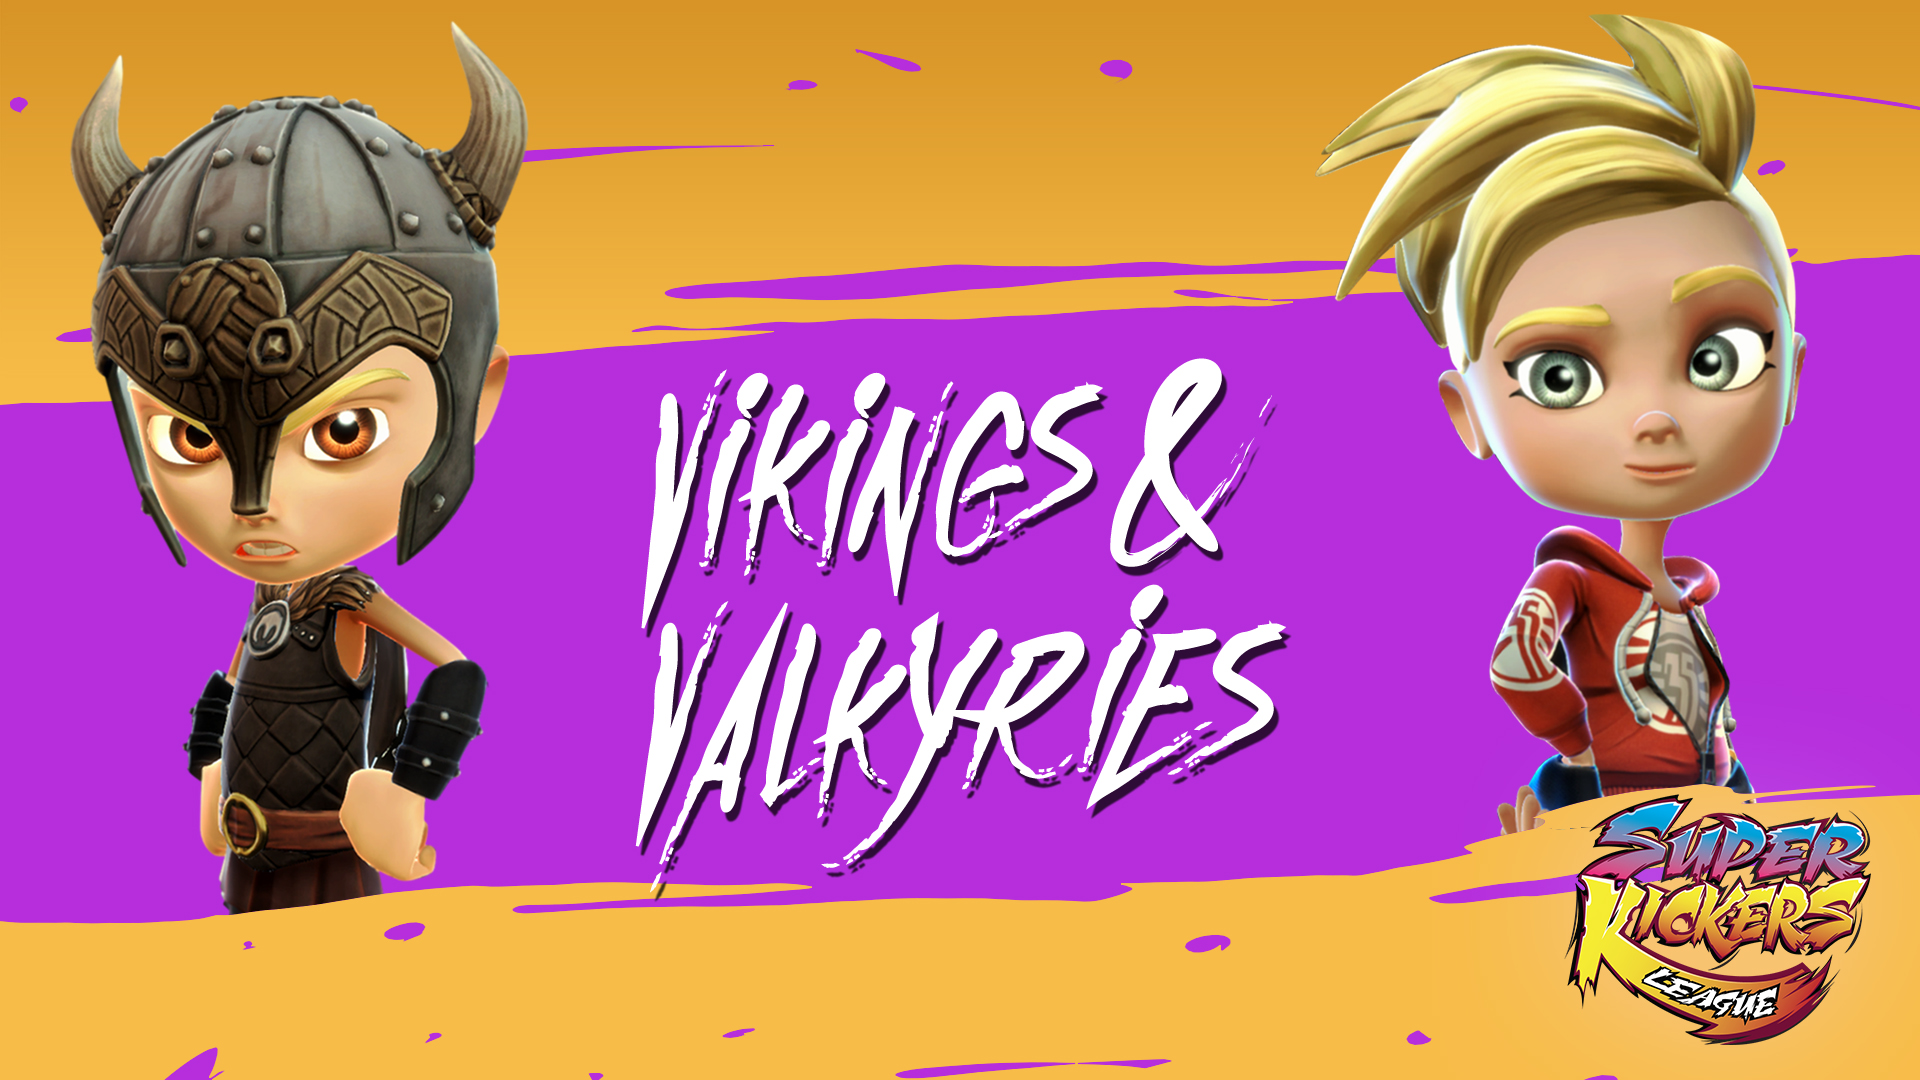 Super Kickers League: Vikings and Valkyries!